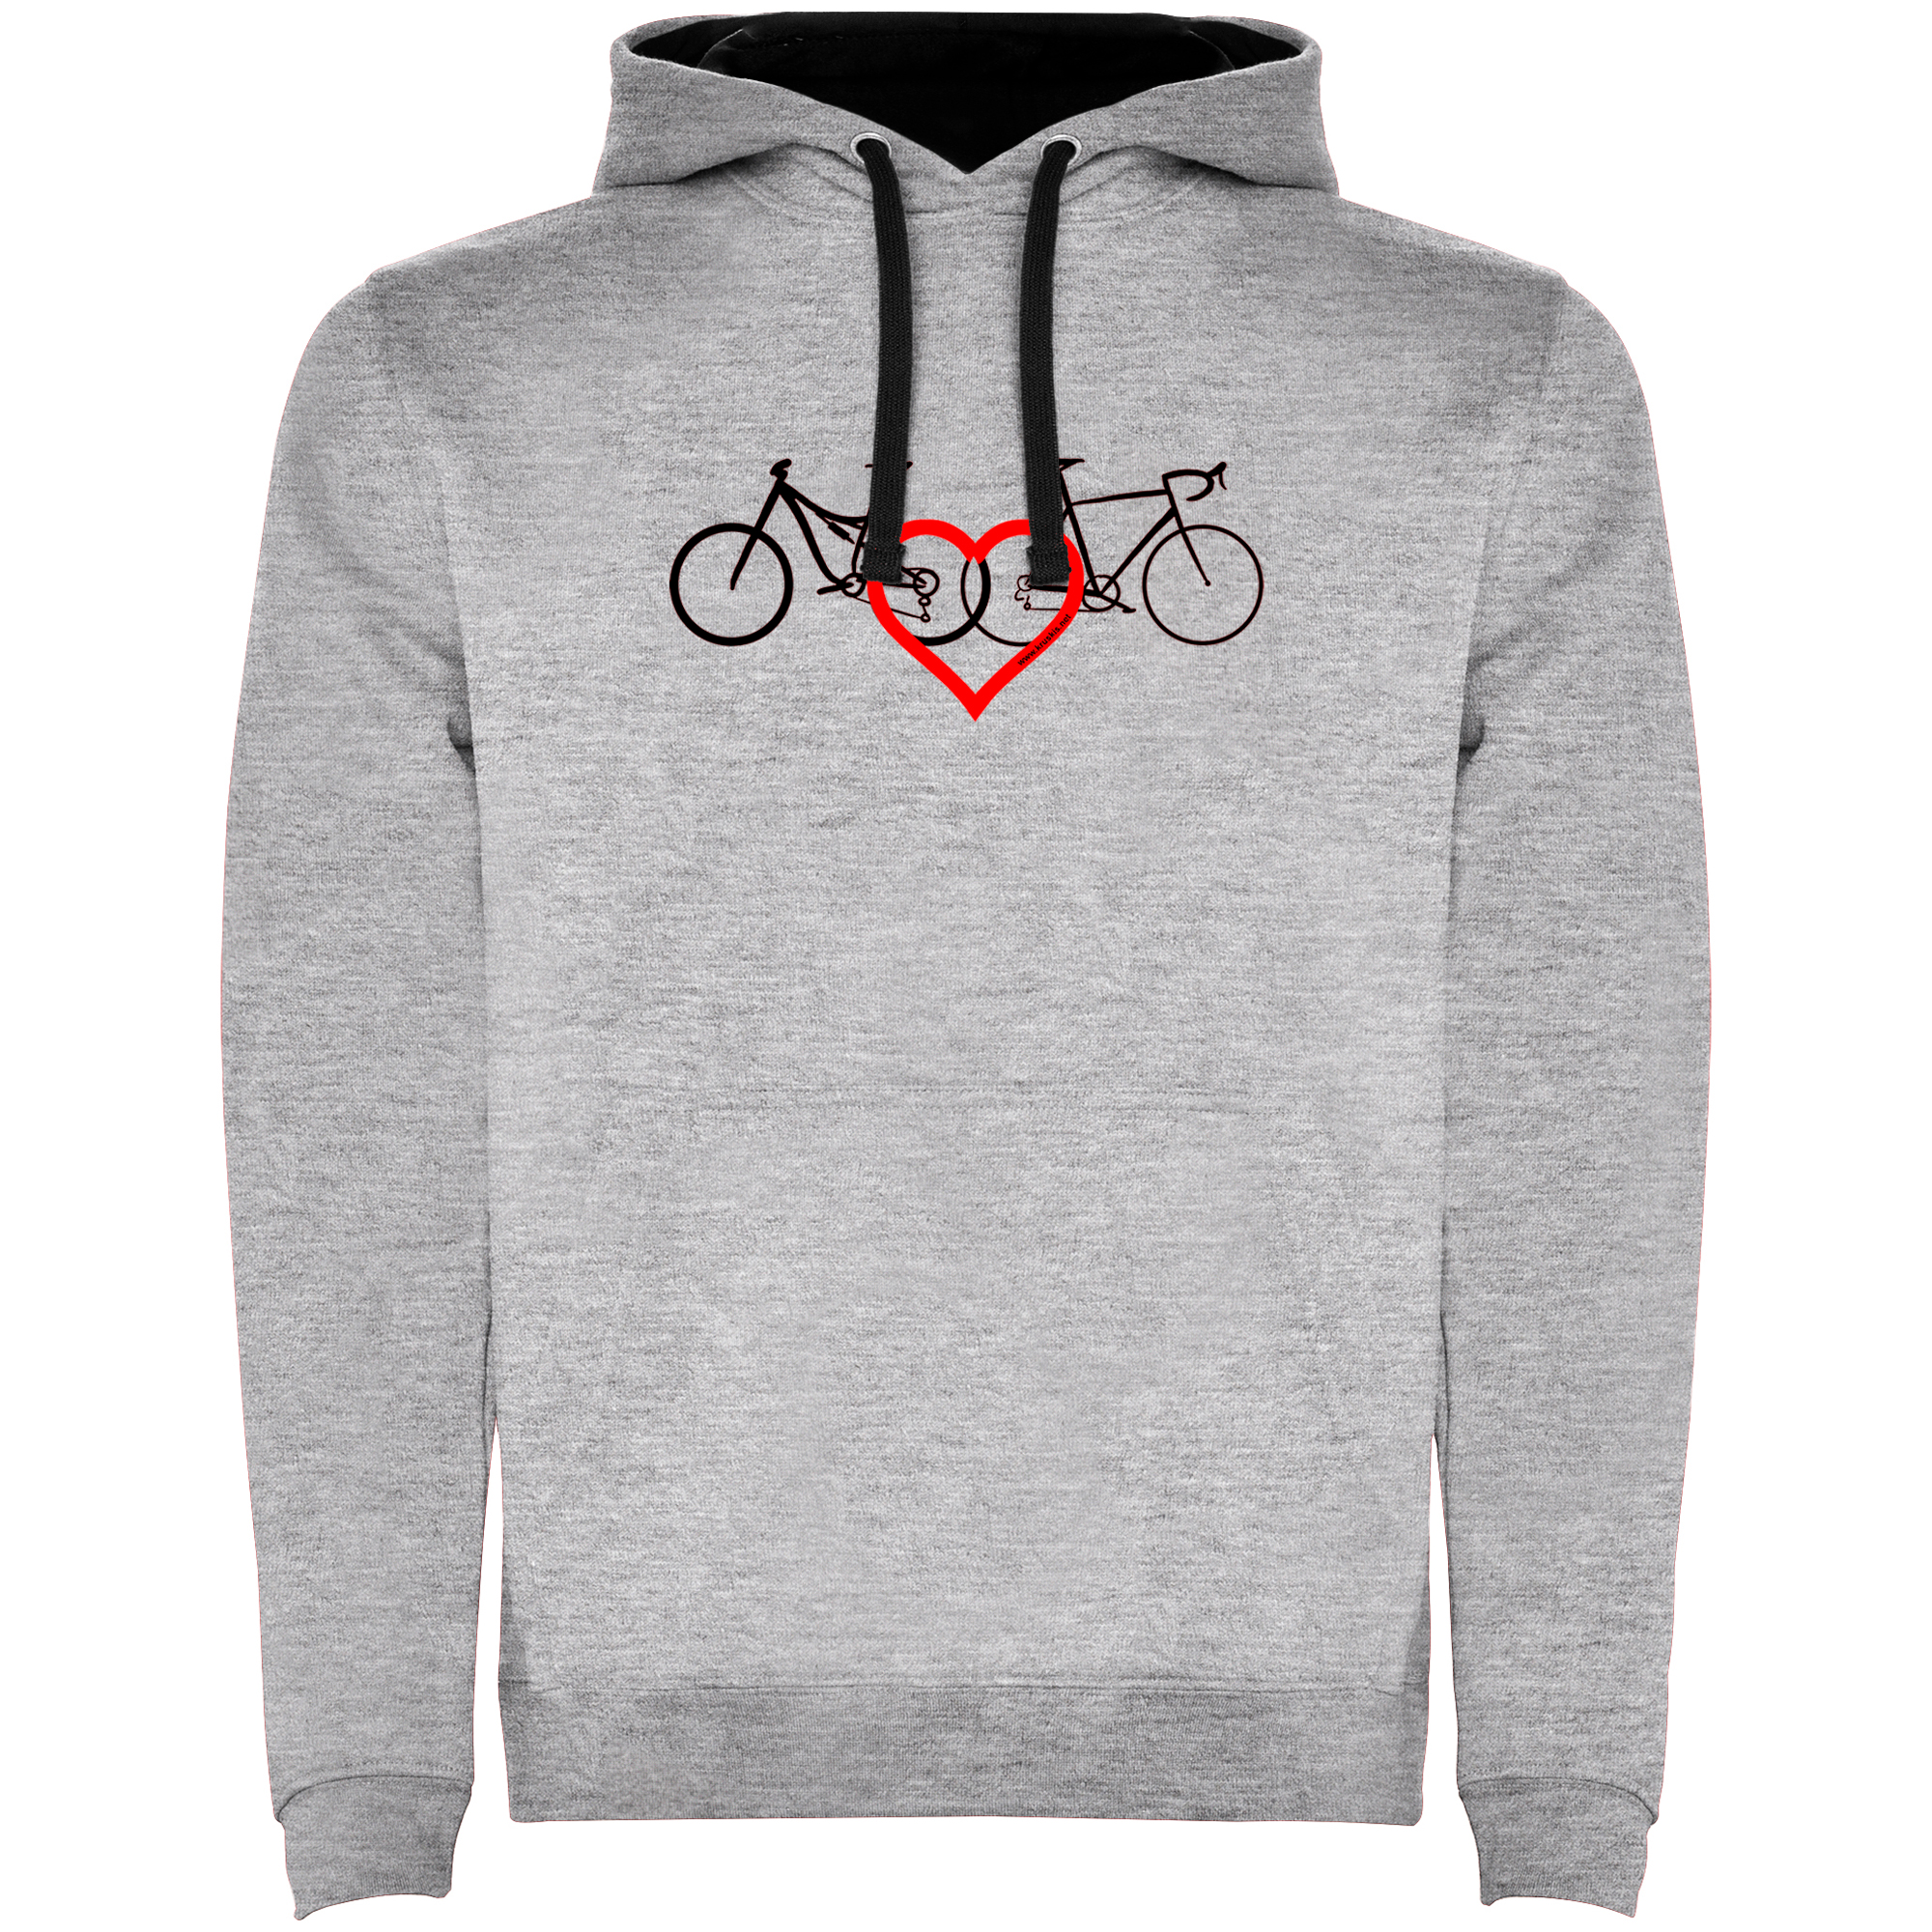 Hoodie Cycling Love Unisex